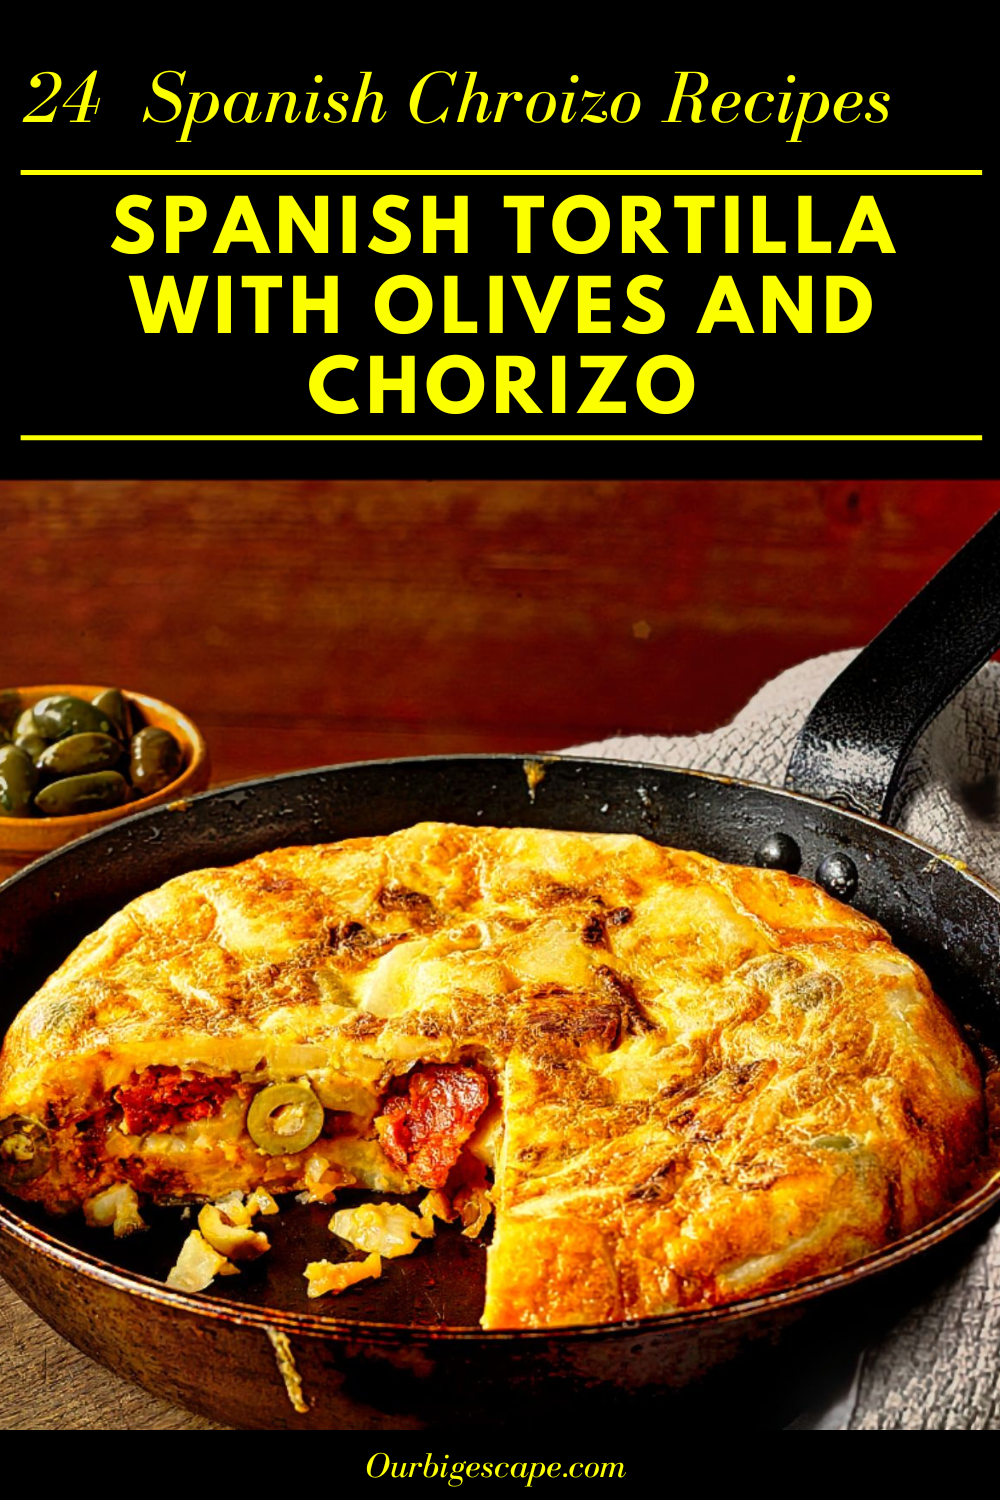 Spanish Tortilla with Olives and Chorizo - Spanish recipes for chorizio